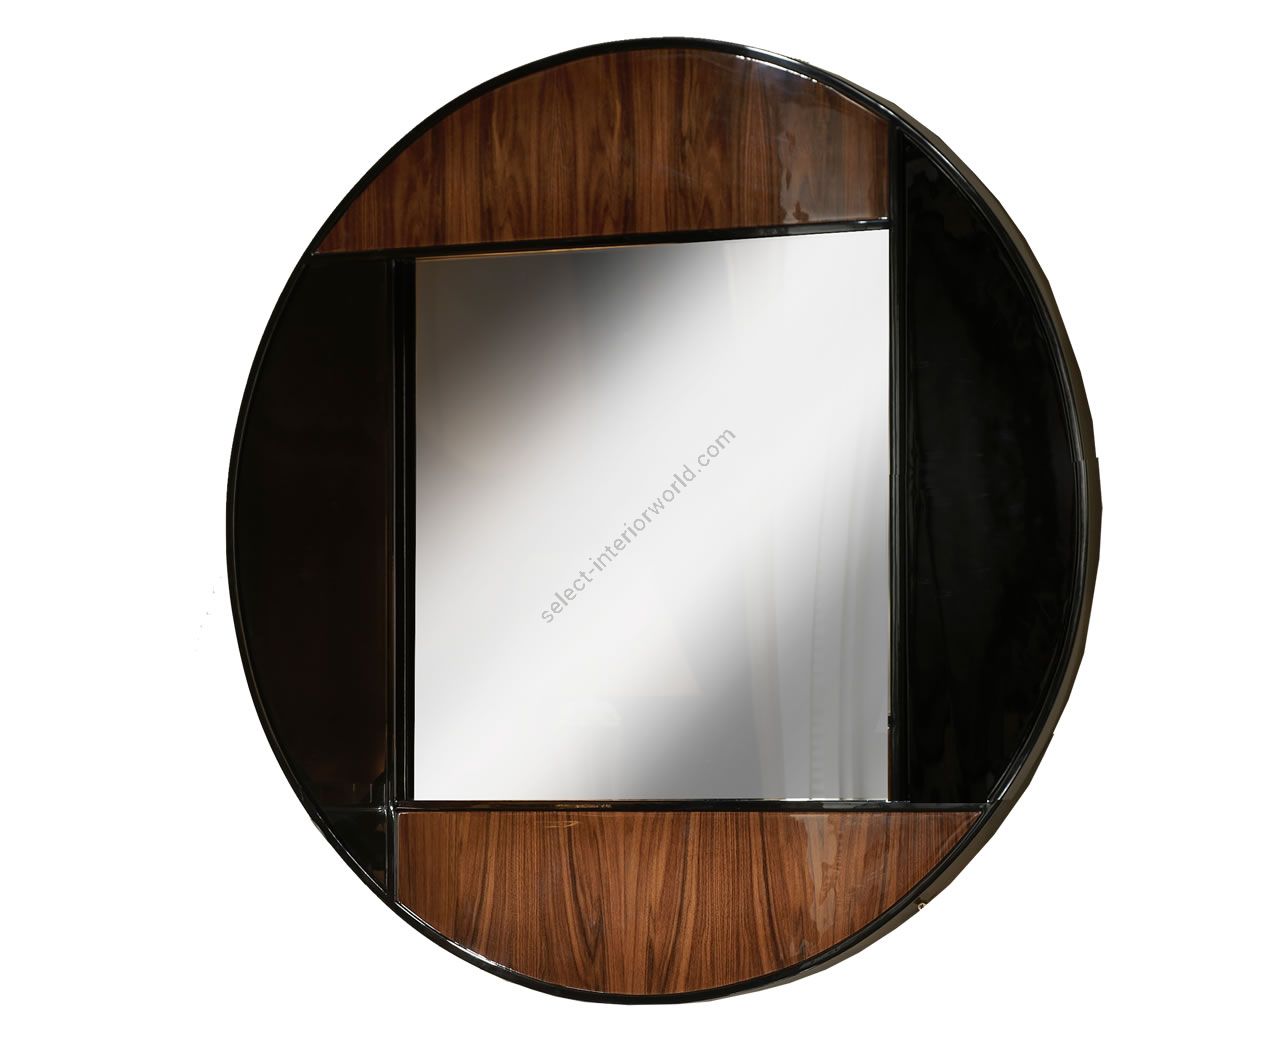 Mariner / Round Wall Mounted Mirror / WILSHIRE 50218.0